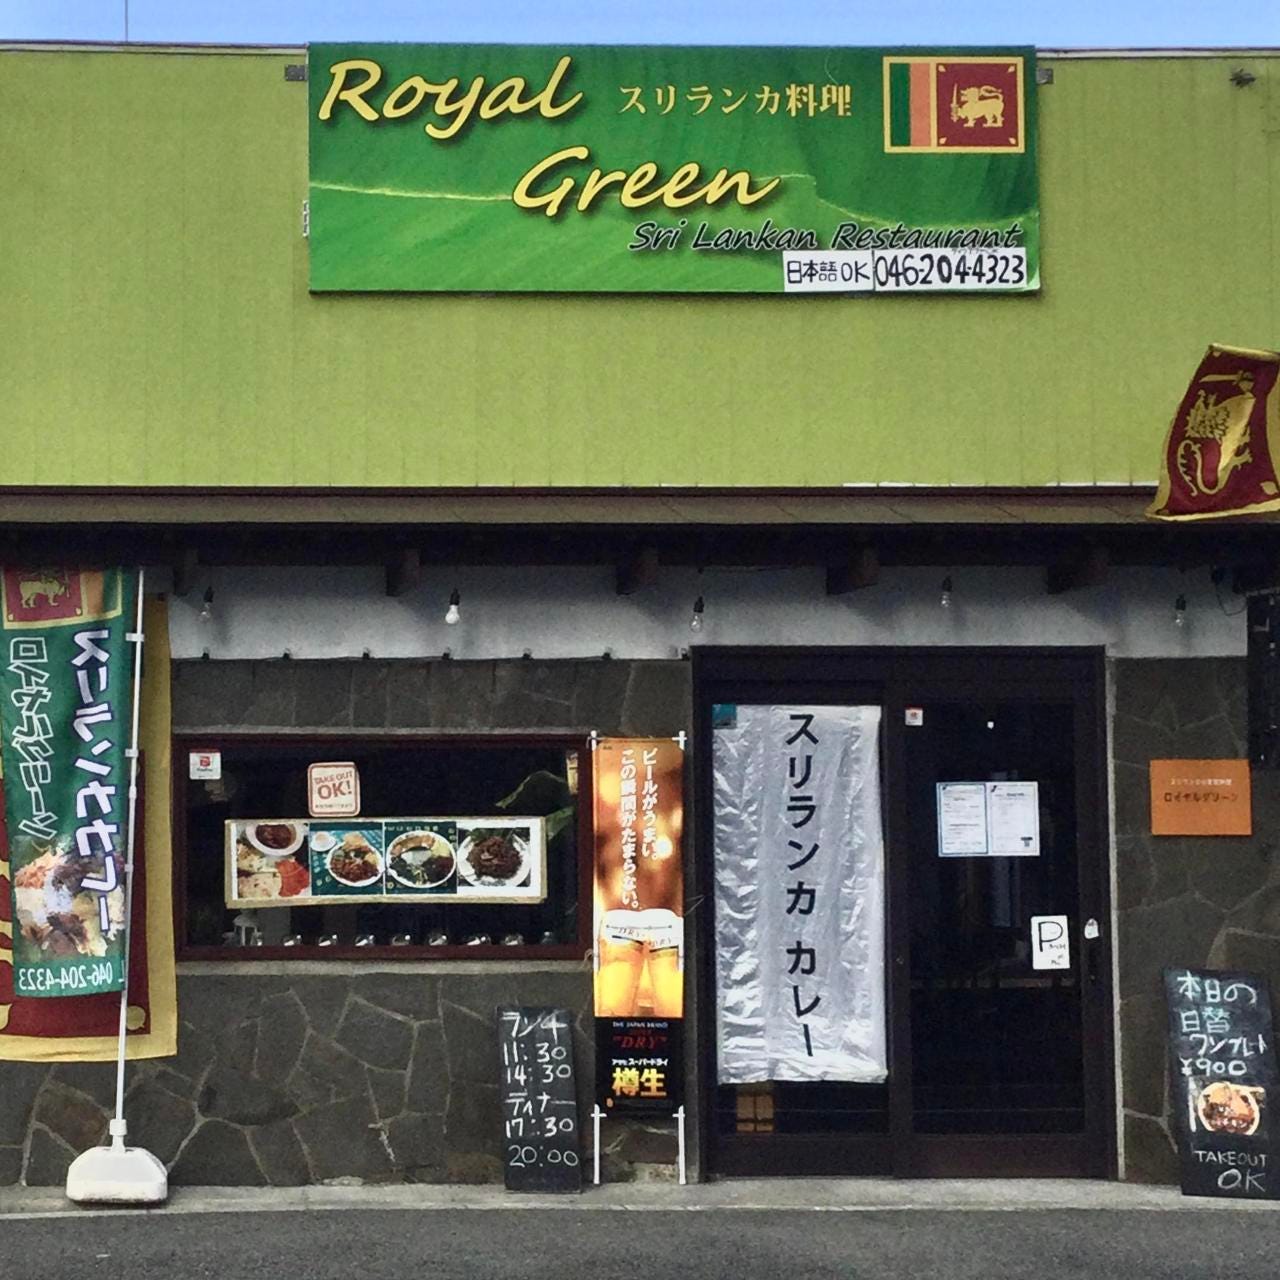 Royal Green Restaurant & BarのURL1